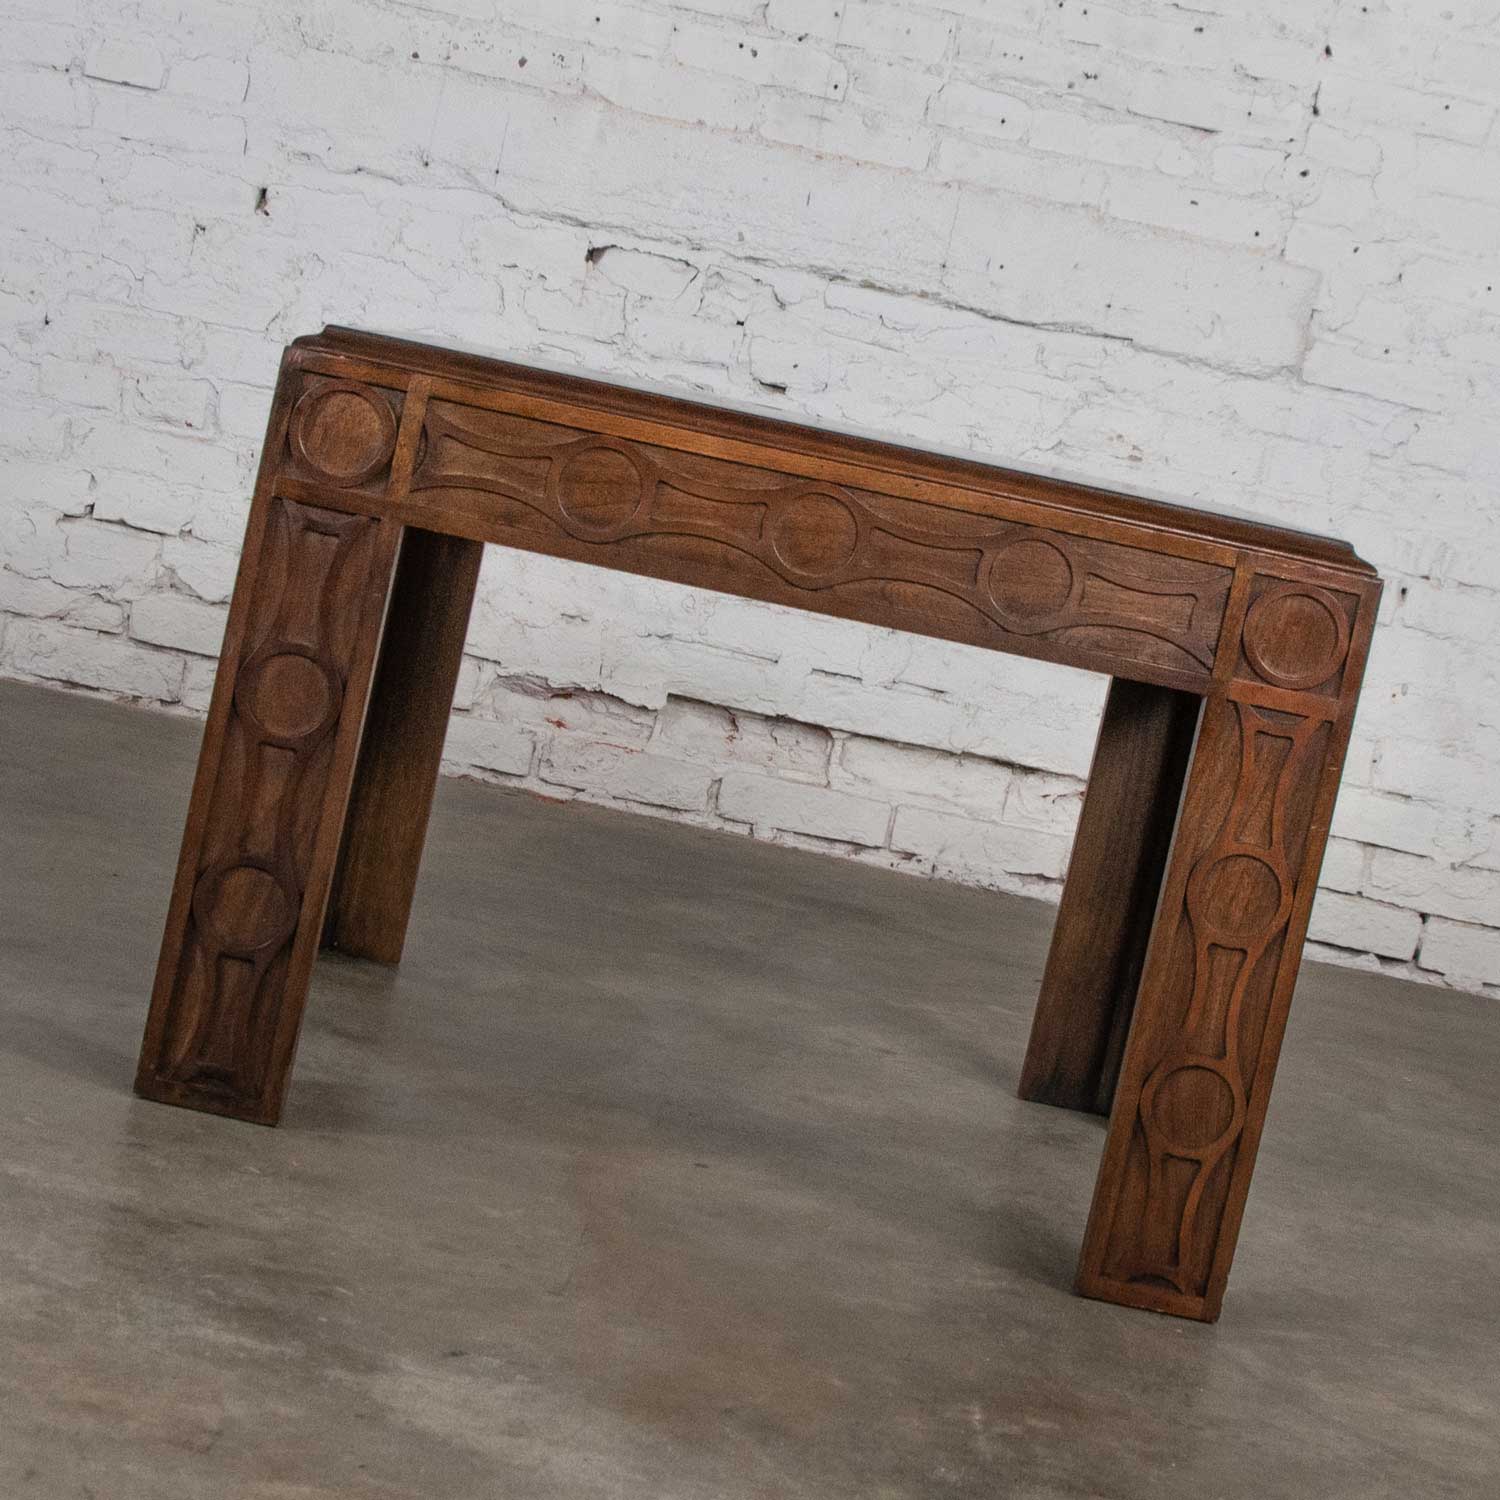 Vintage Modern Square Lane End or Side Table with Carved Leg Design & Chevron Veneer Top